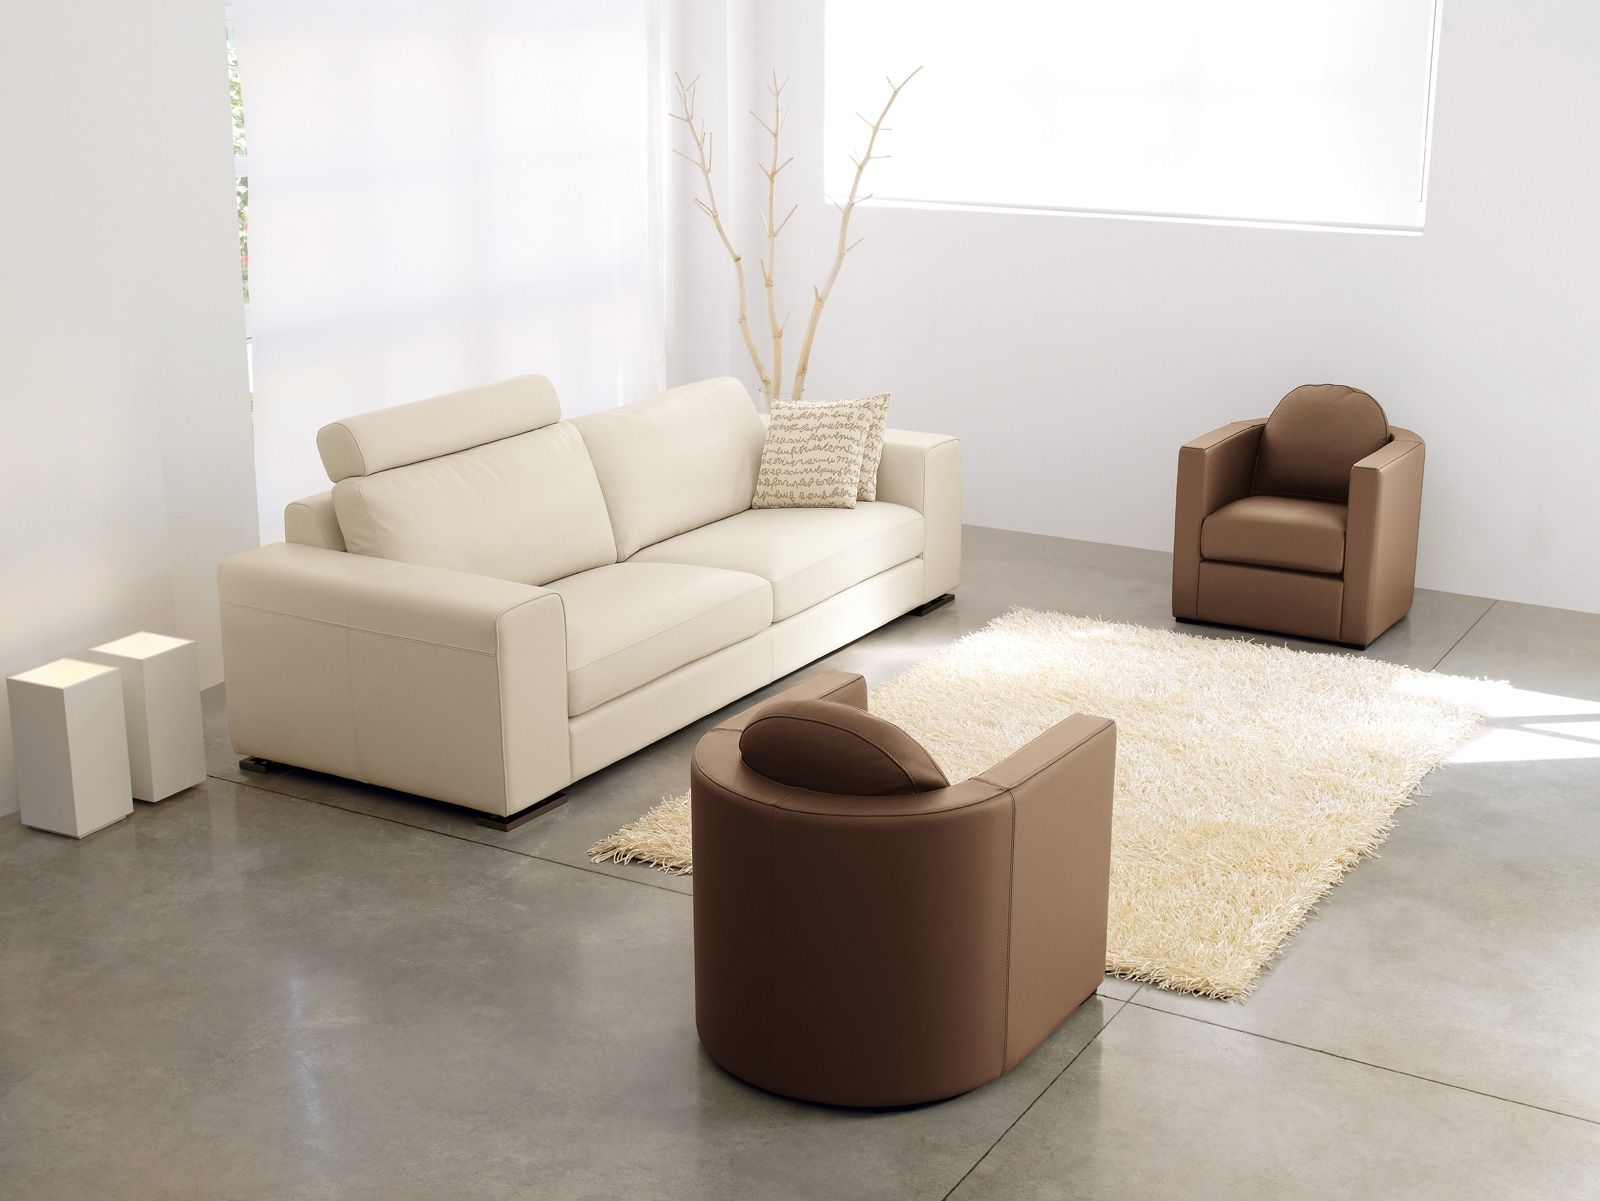 ergonomic living room furniture home